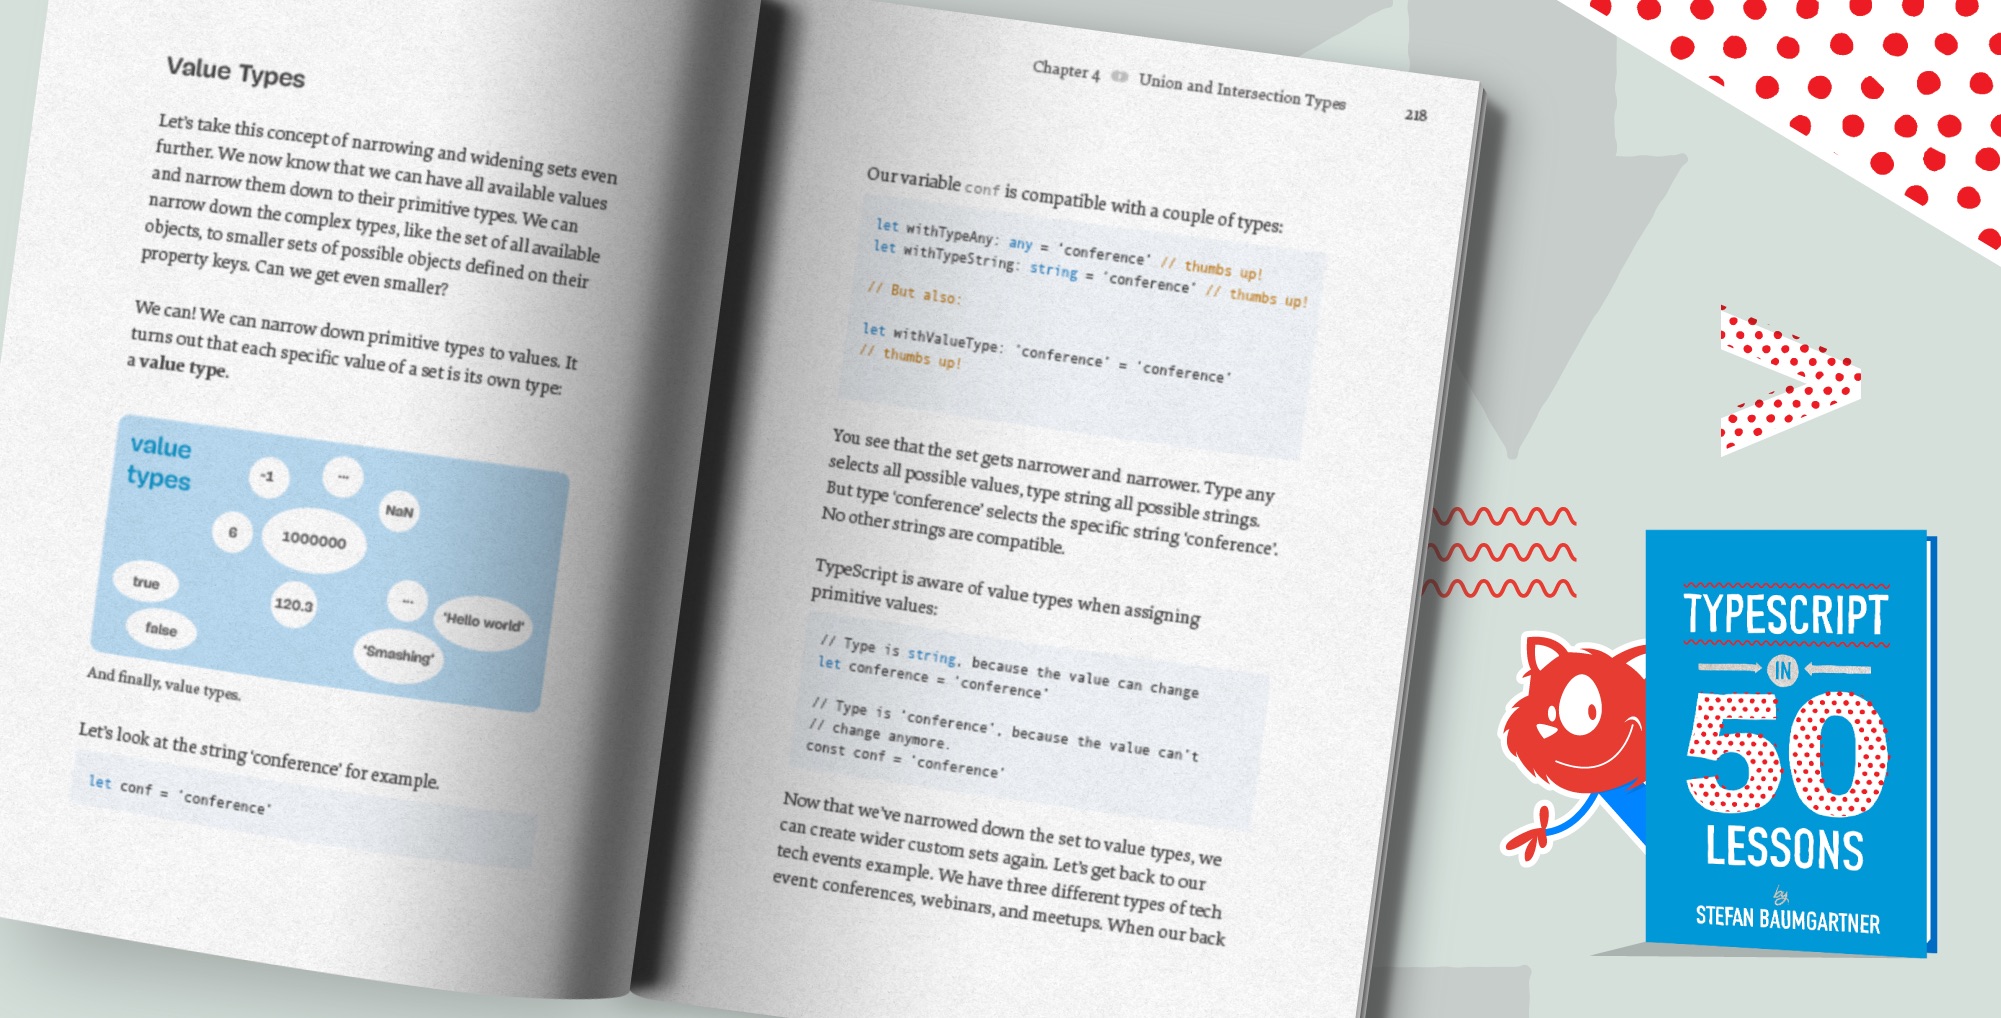 TypeScript in 50 Lessons, a book by Stefan Baumgartner